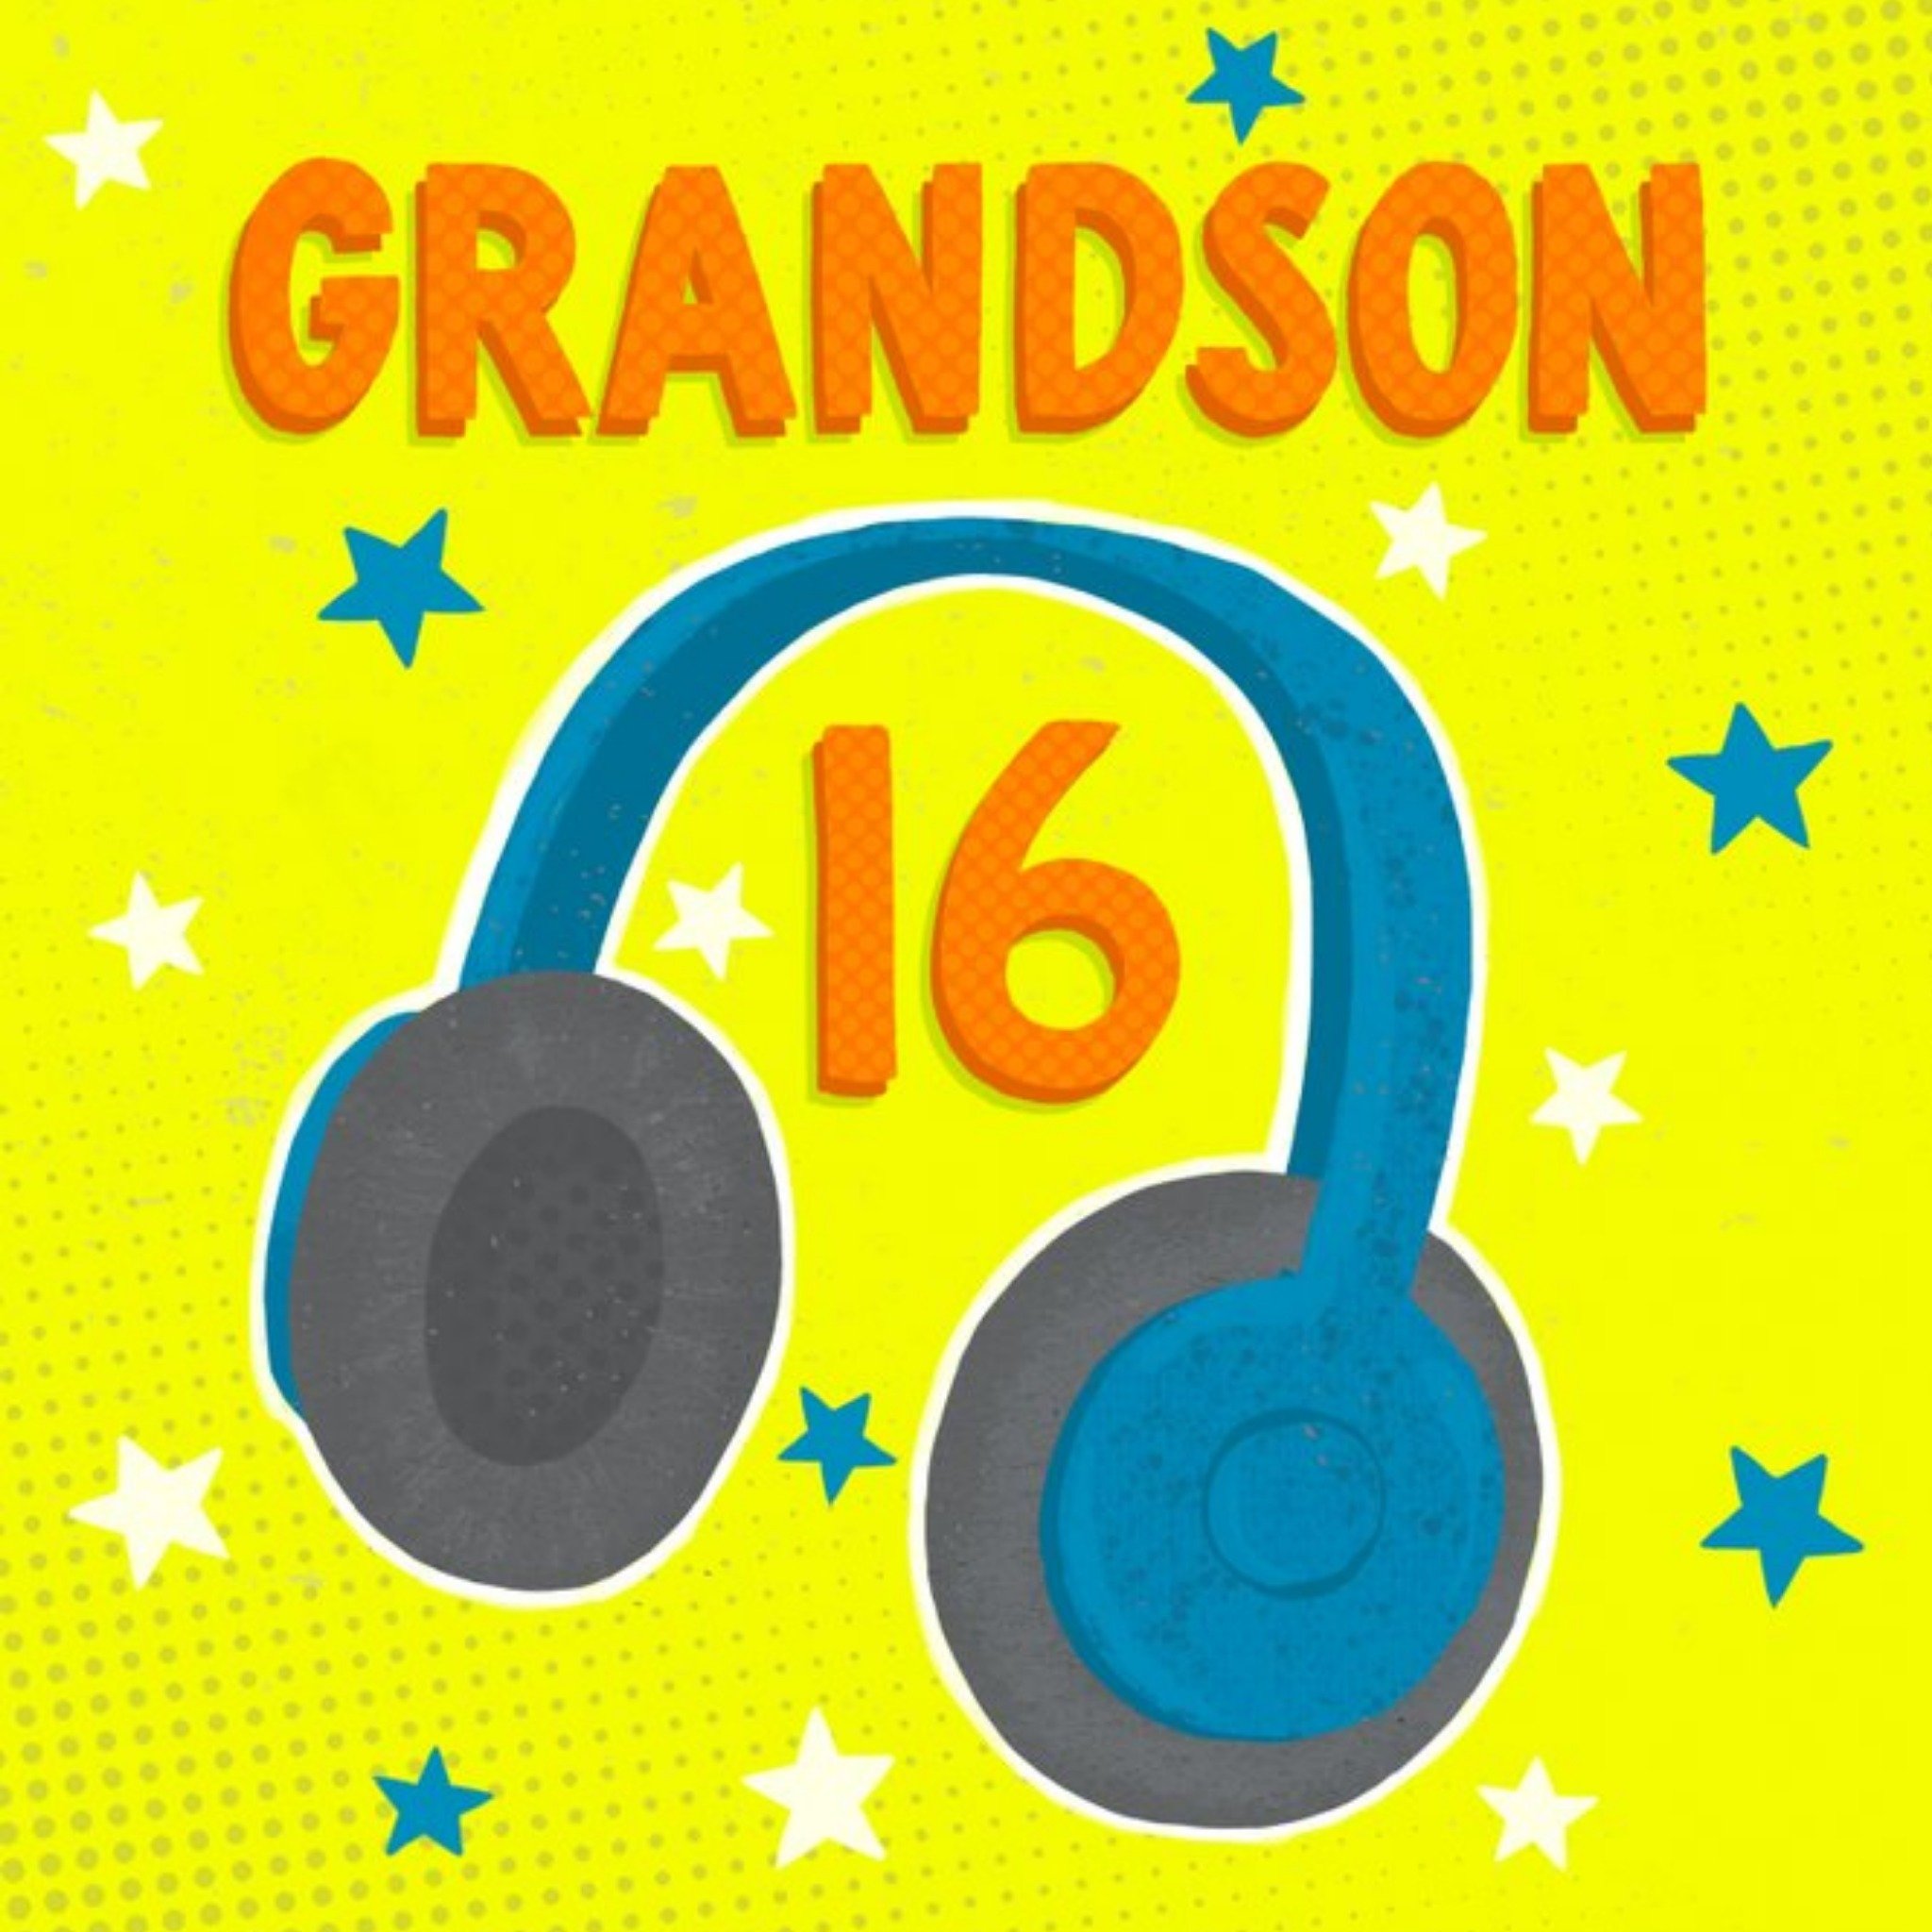 Moonpig Bright Graphic Illustrated Headphones Pop Art 16th Birthday Grandson Card, Square